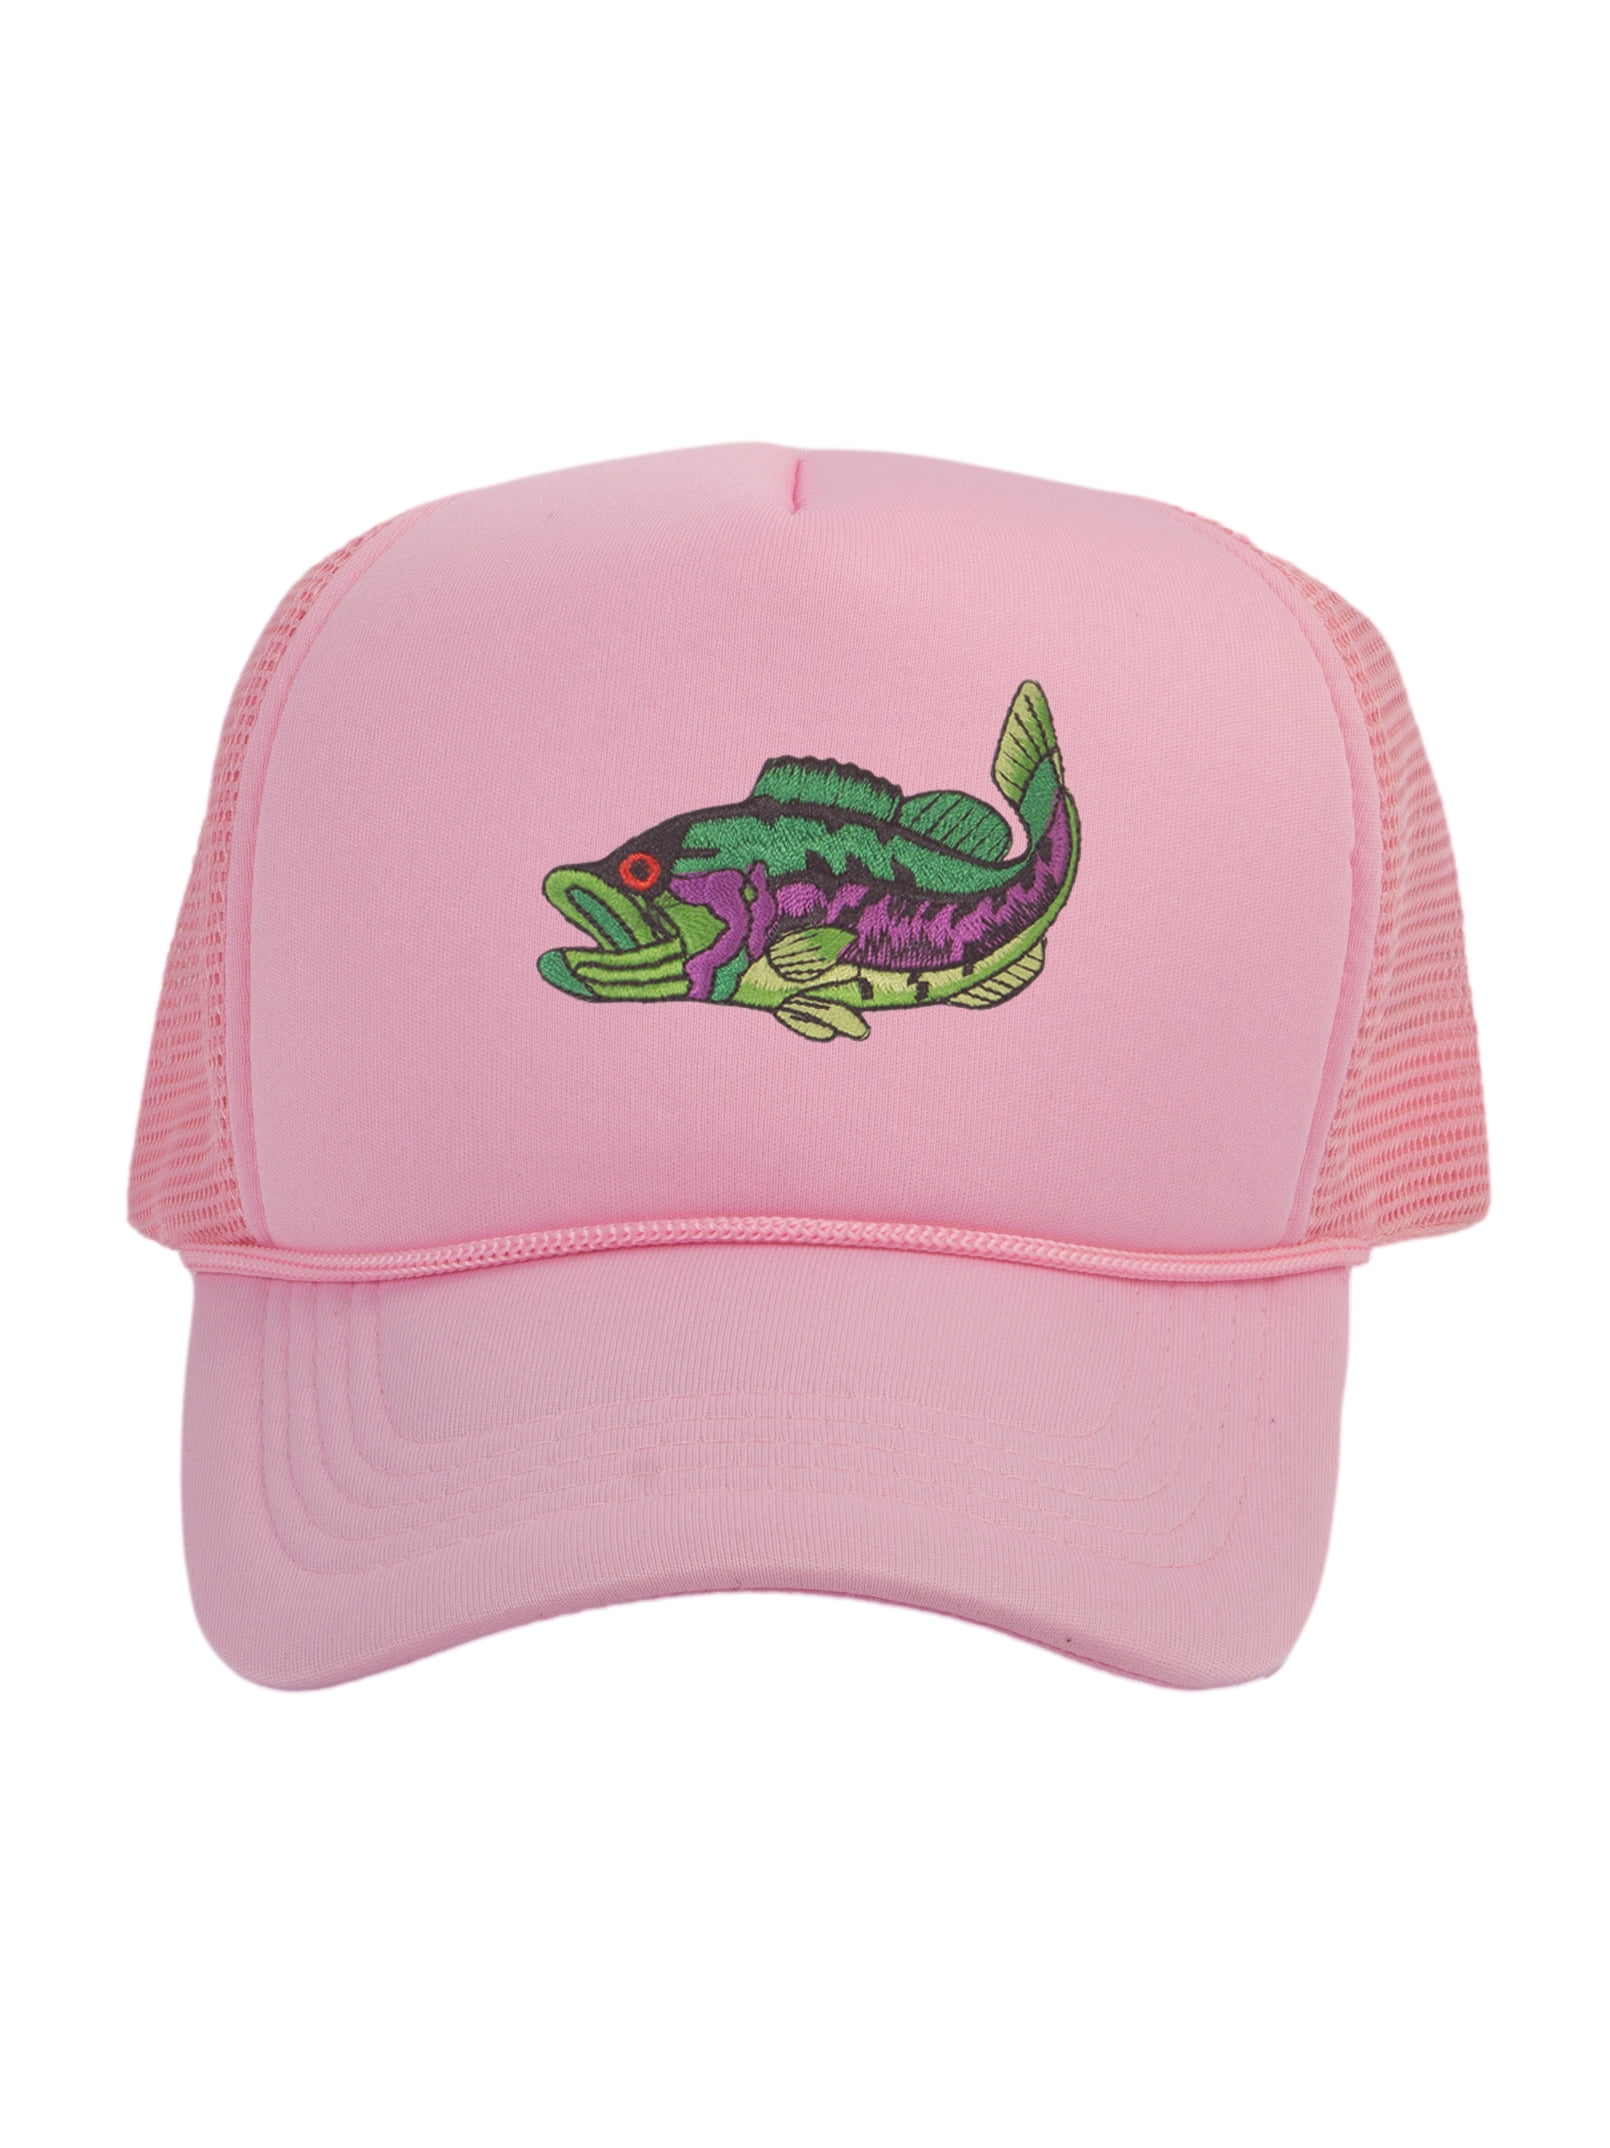 Outdoor Cap OC Bass Fishing Hat Tan Brown Green Print Trucker